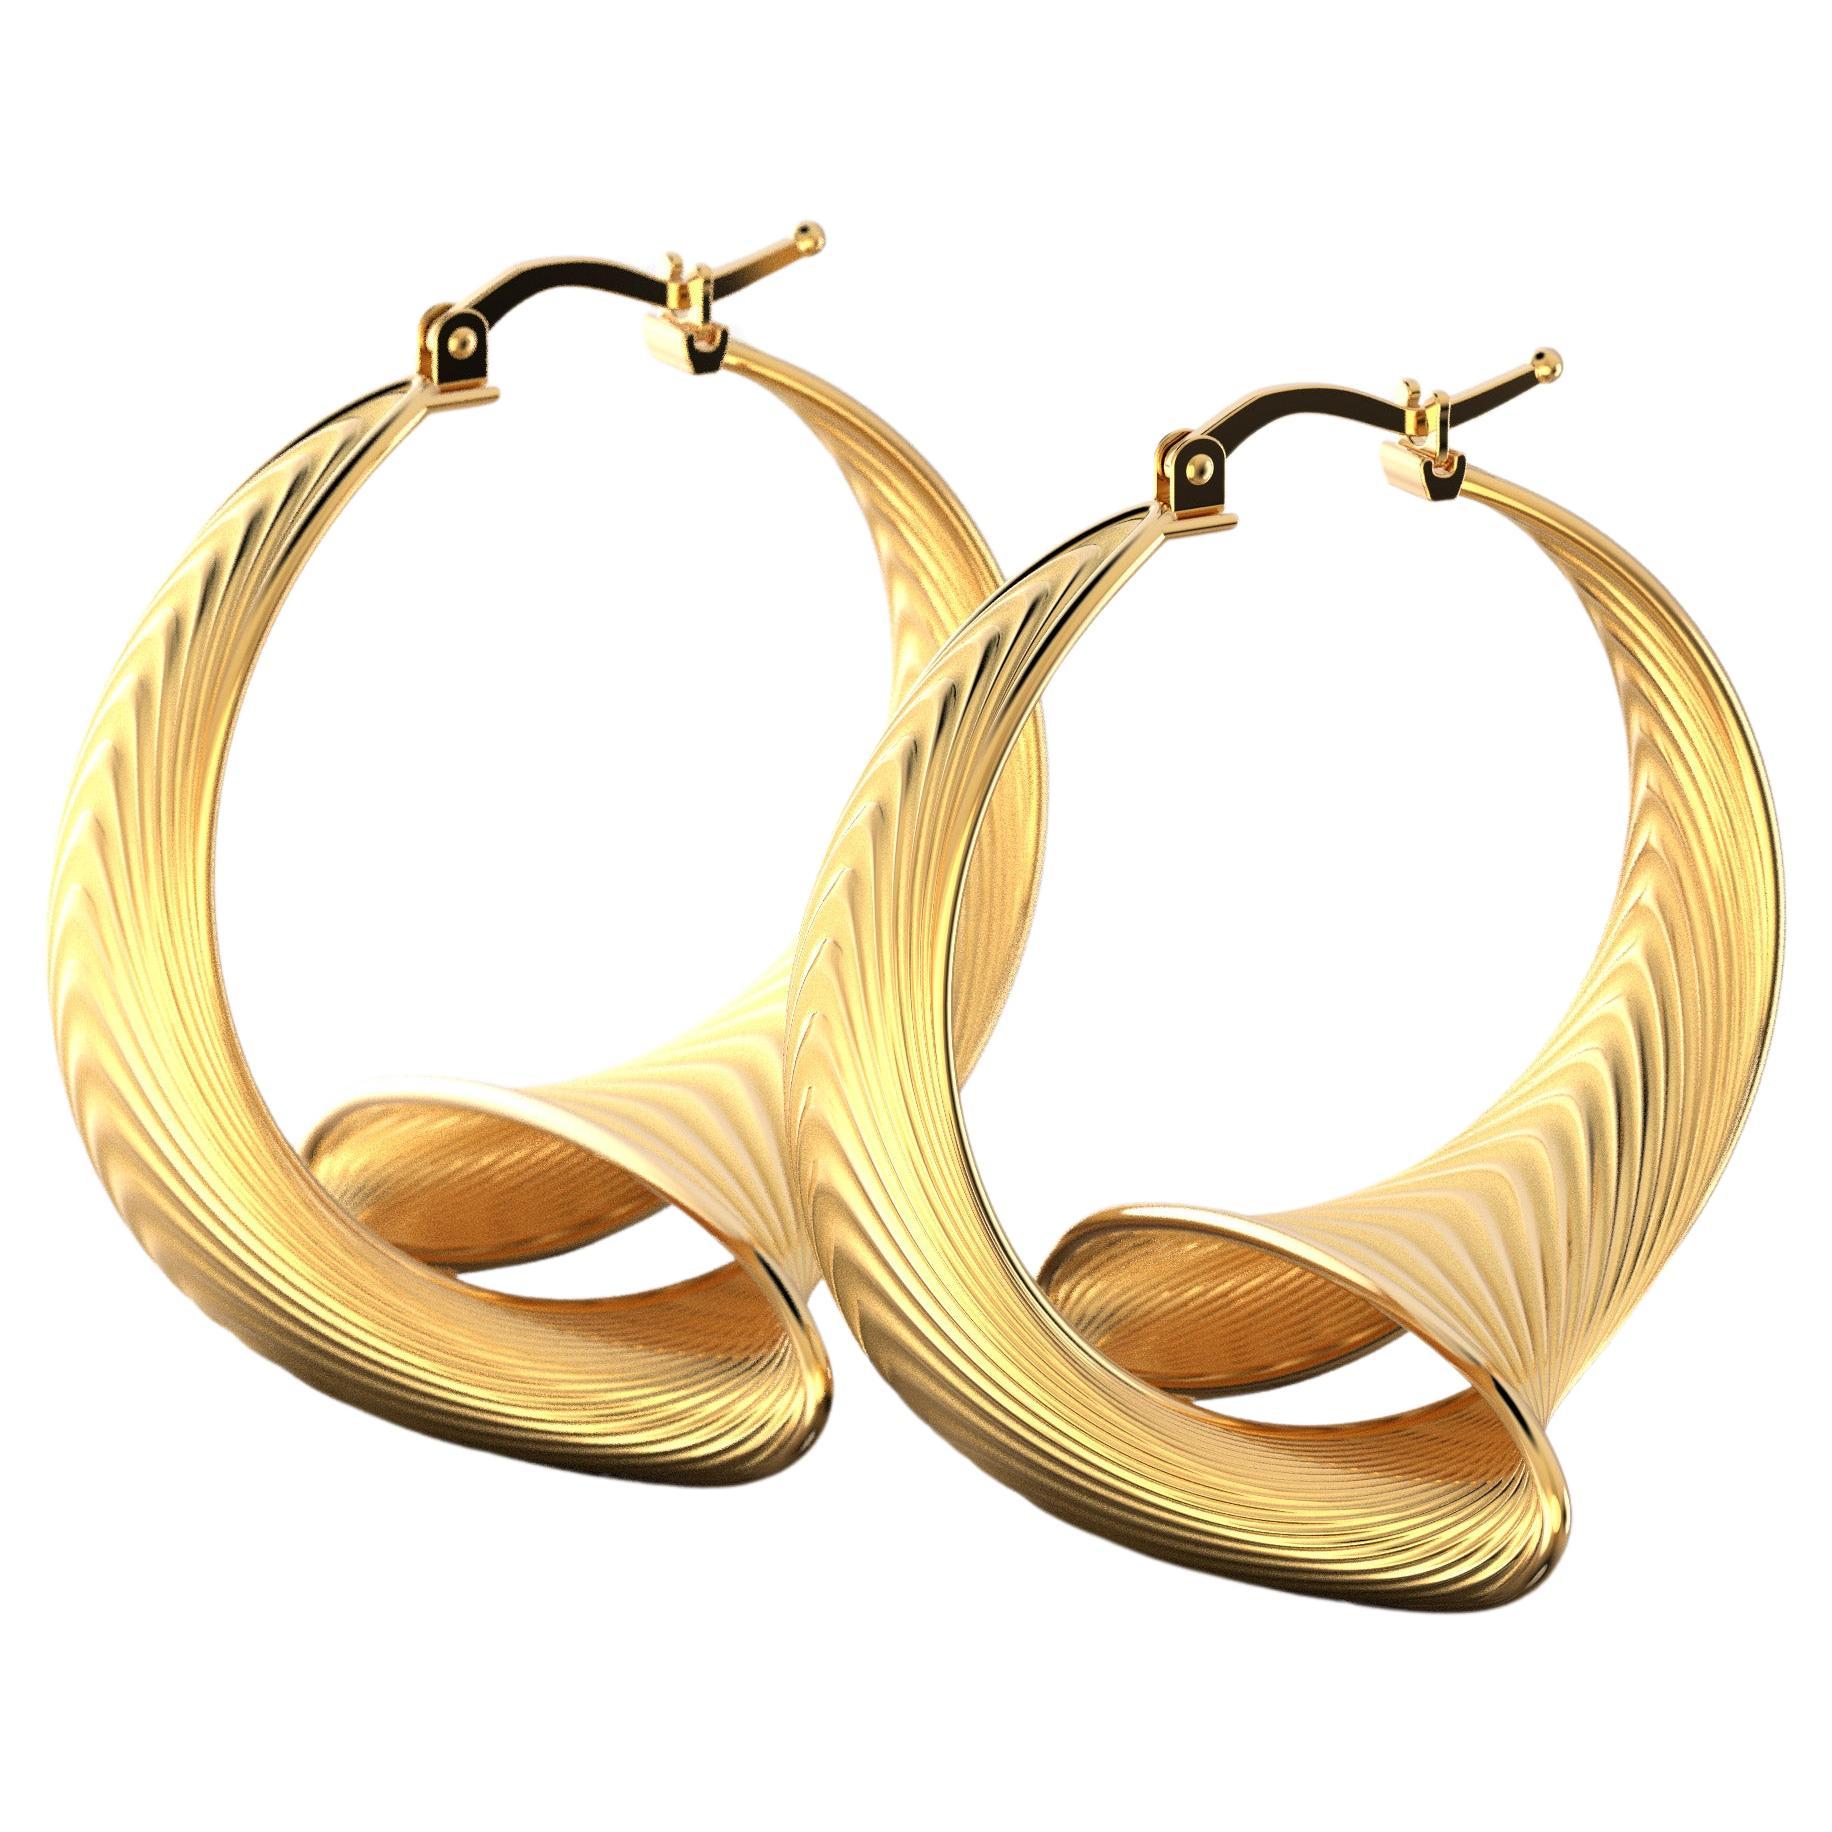  Oltremare Gioielli 14k Gold Hoop Earrings Made in Italy, Italian Fine Jewelry 